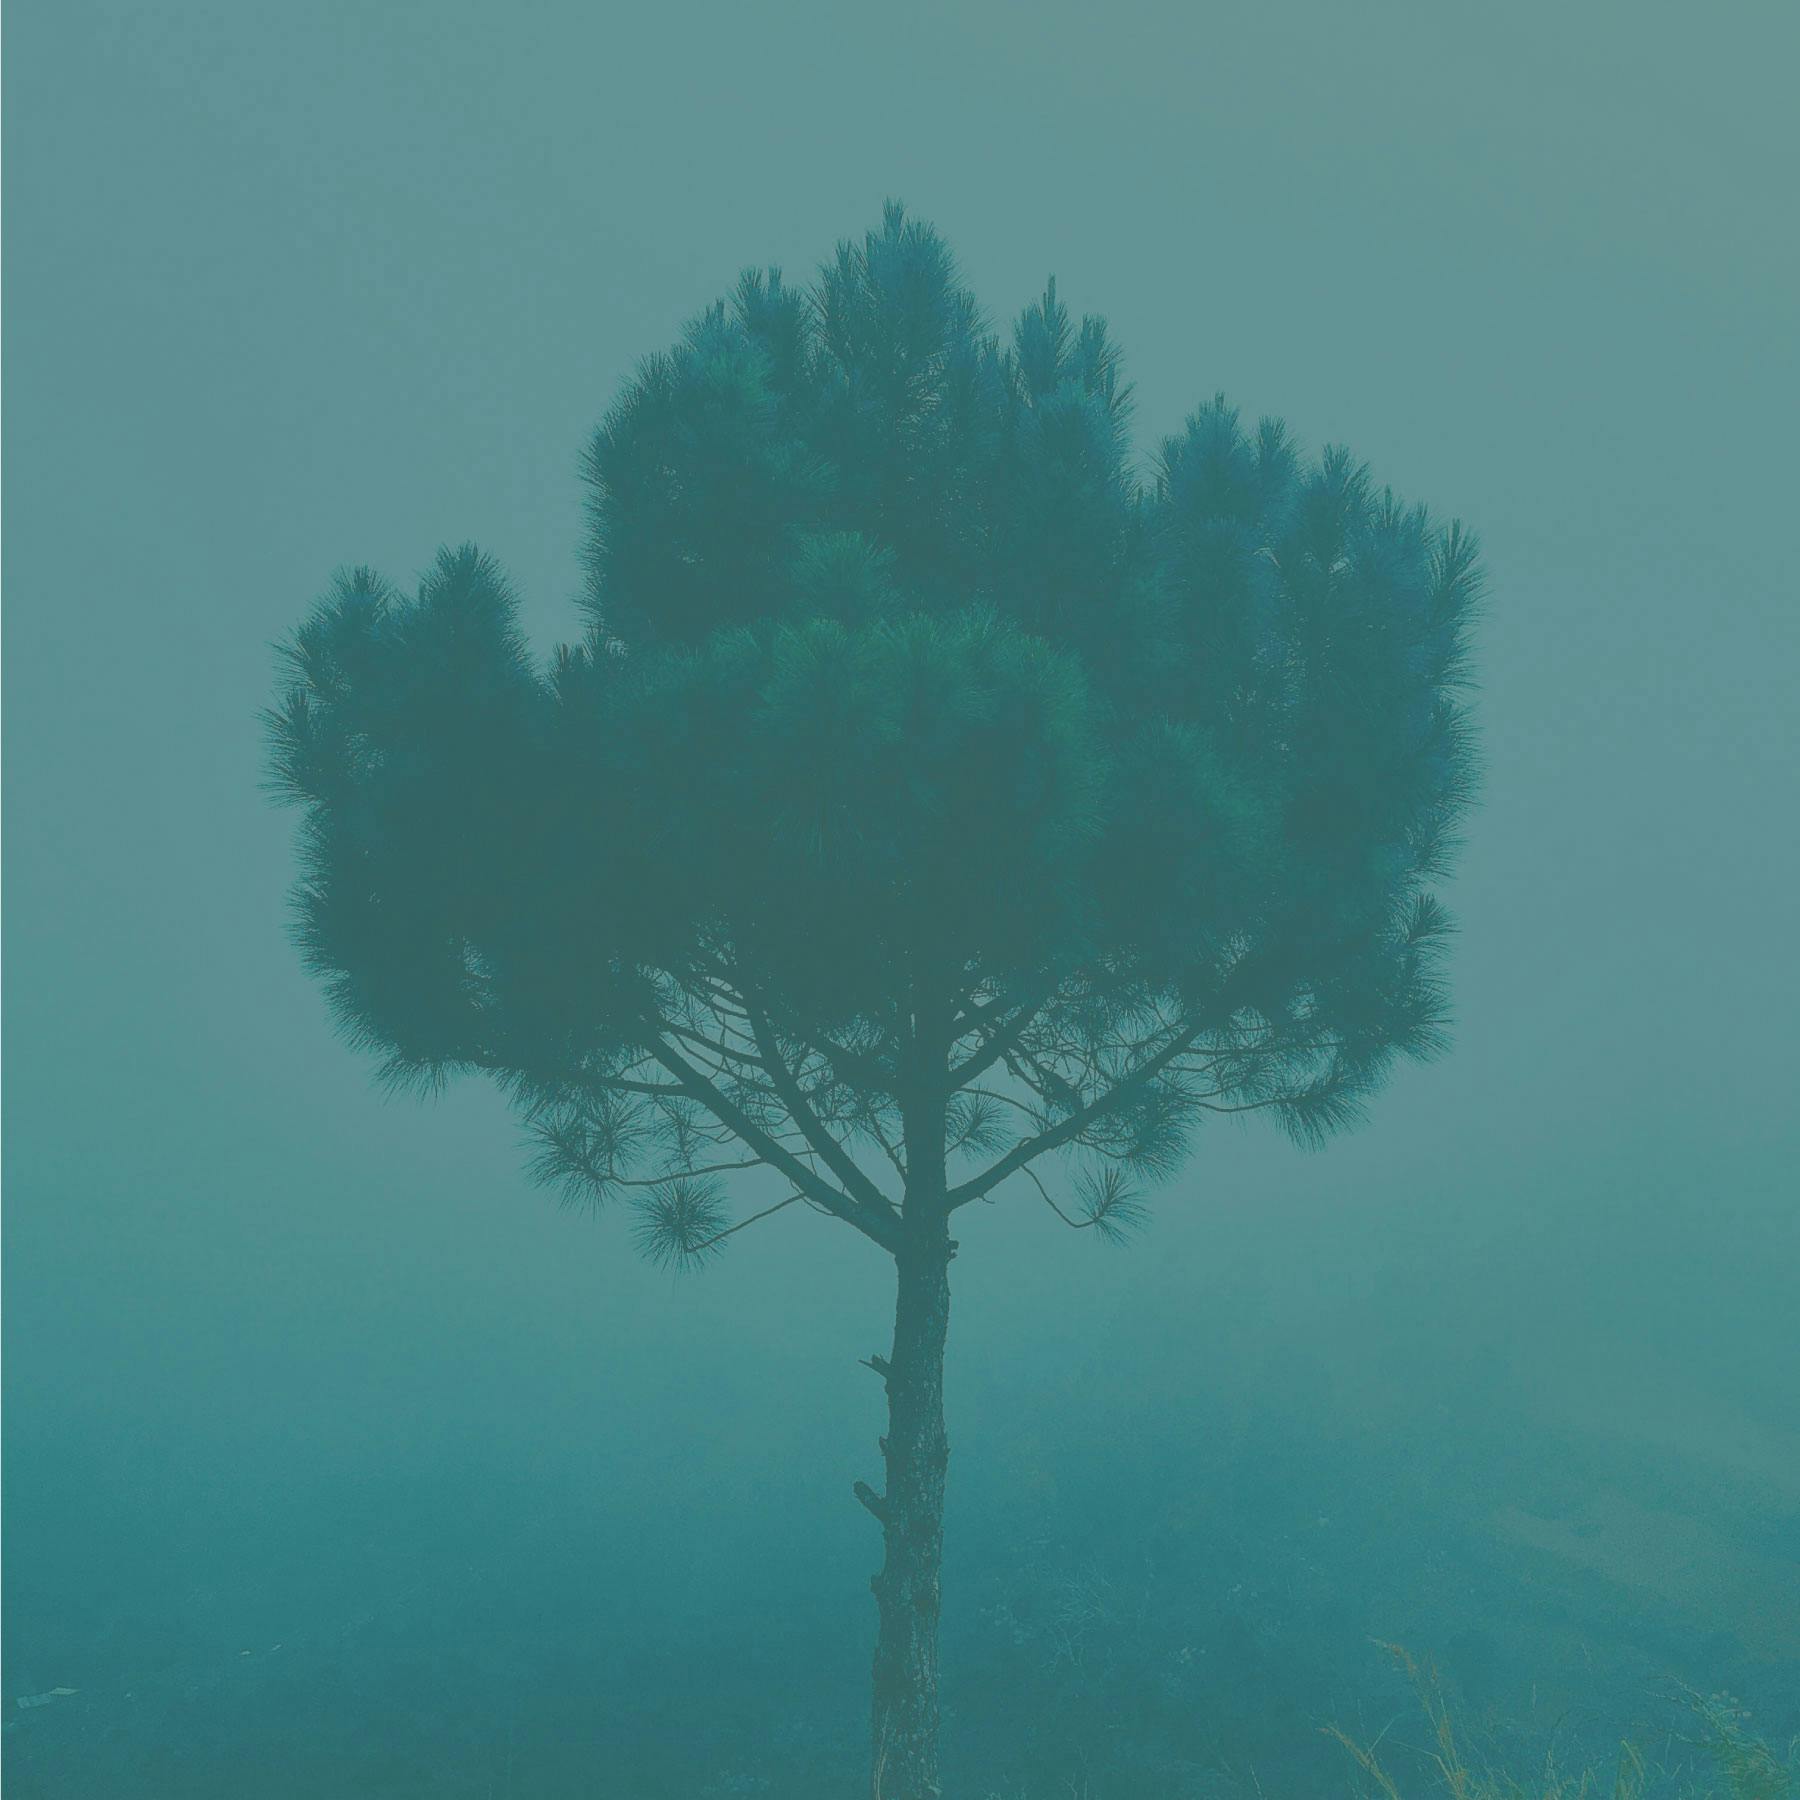 A lone pine tree